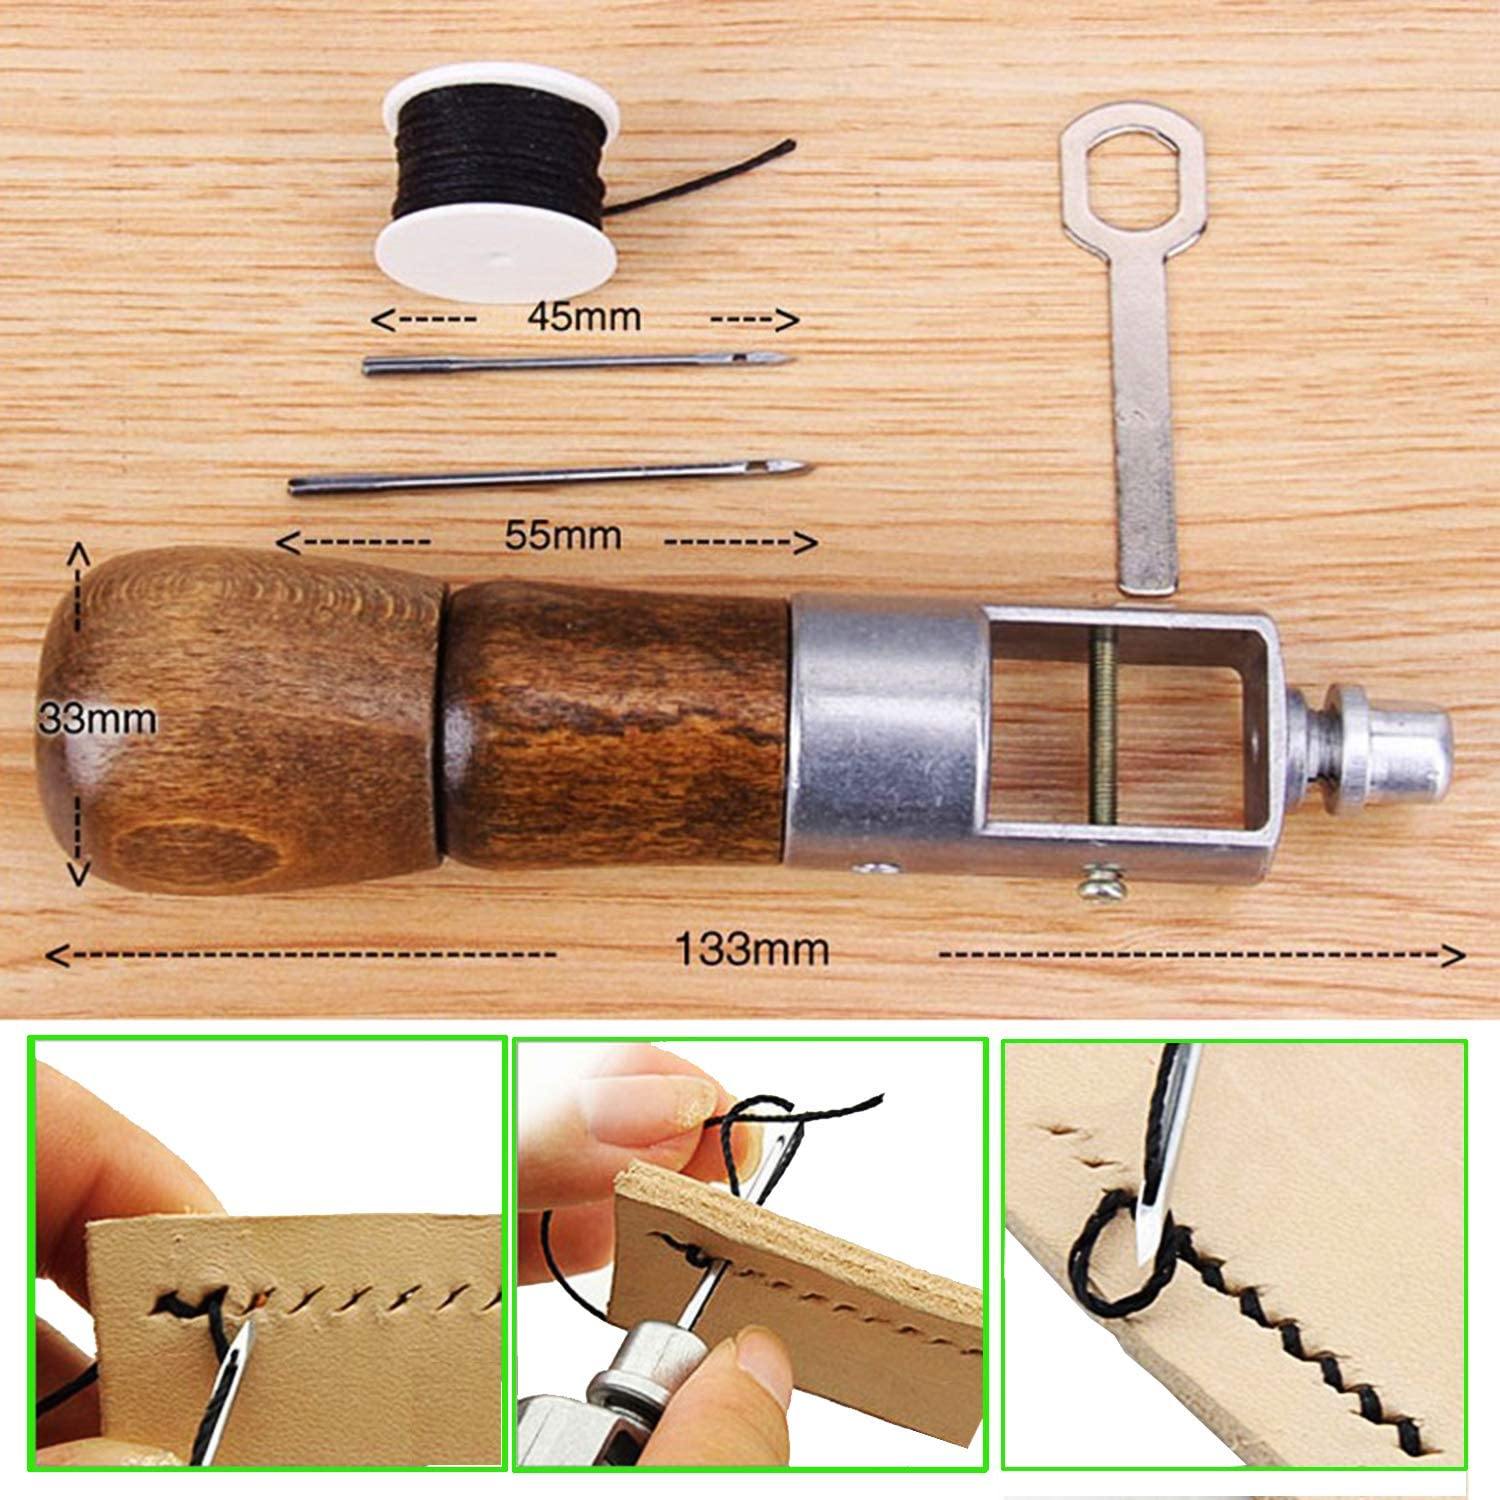 Speedy Stitcher Sewing Awl Kit in Original Box Sewing Device